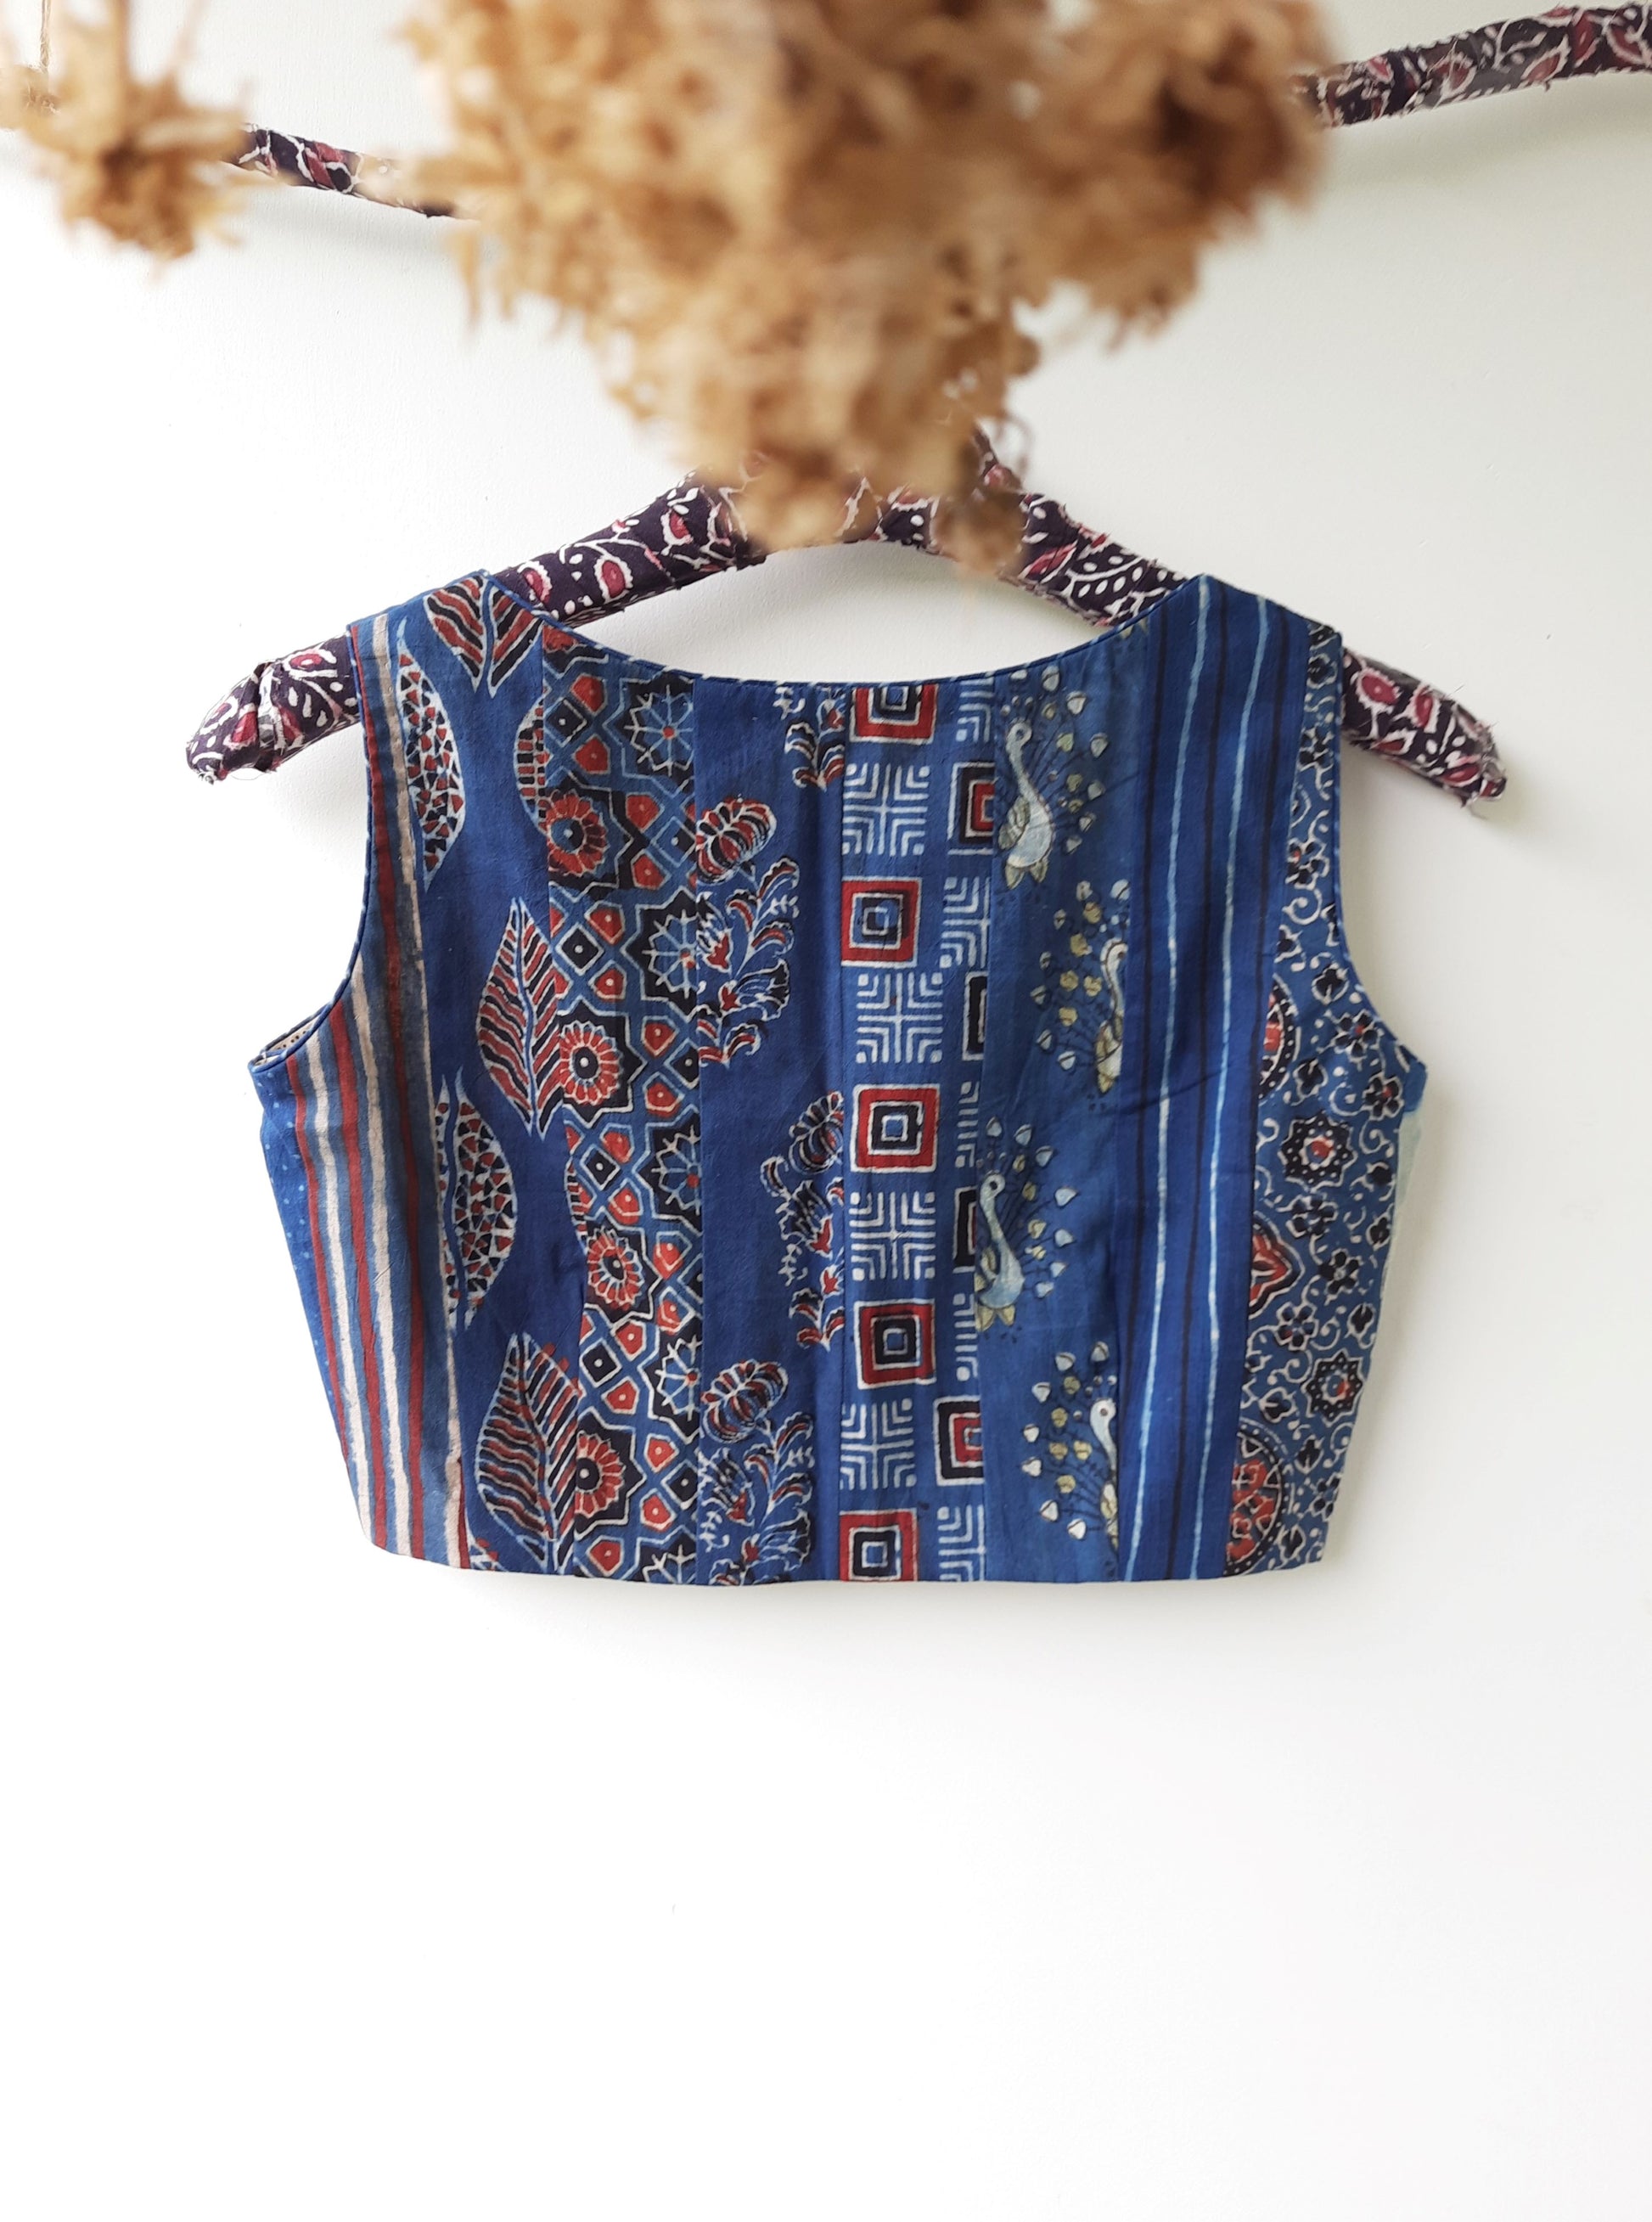 Indigo ajrakh patchwork blouse, Ajrakh prints patchwork blouse, Patchwork blouse, Natural dyed indigo ajrakh hand block print patchwork blouse, Sustainable fashion